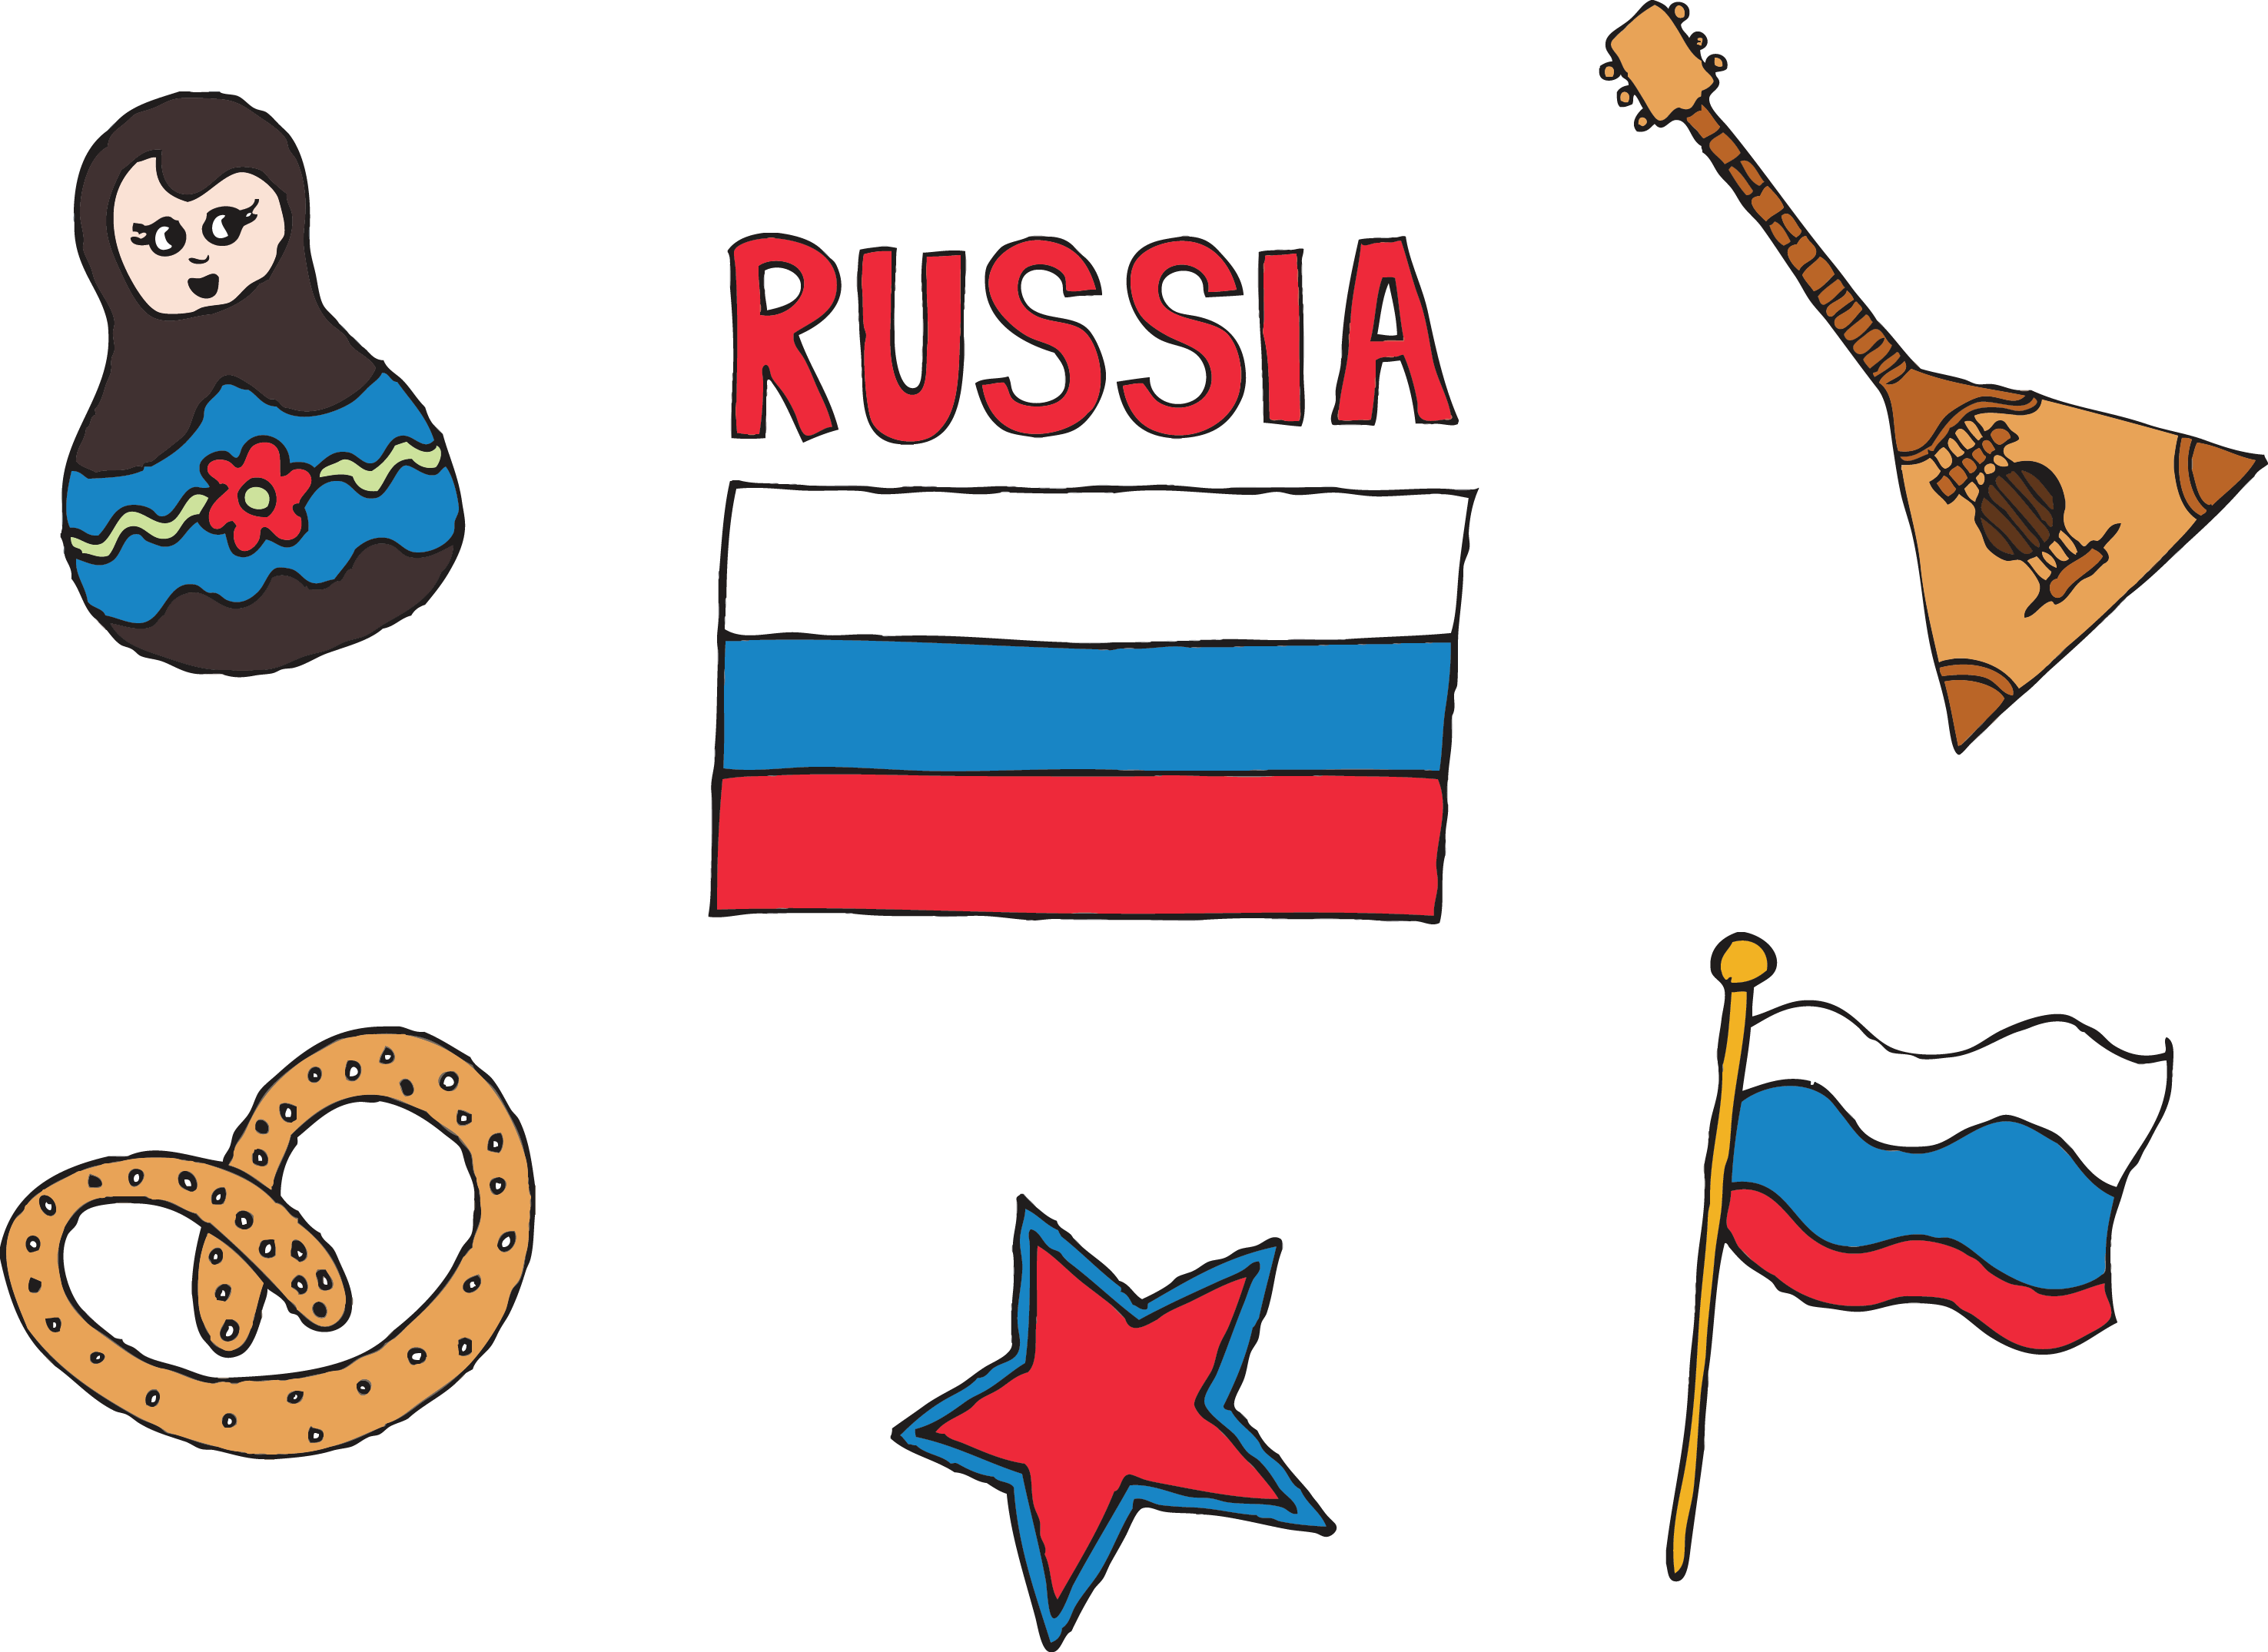 Russian symbols PNG Image.